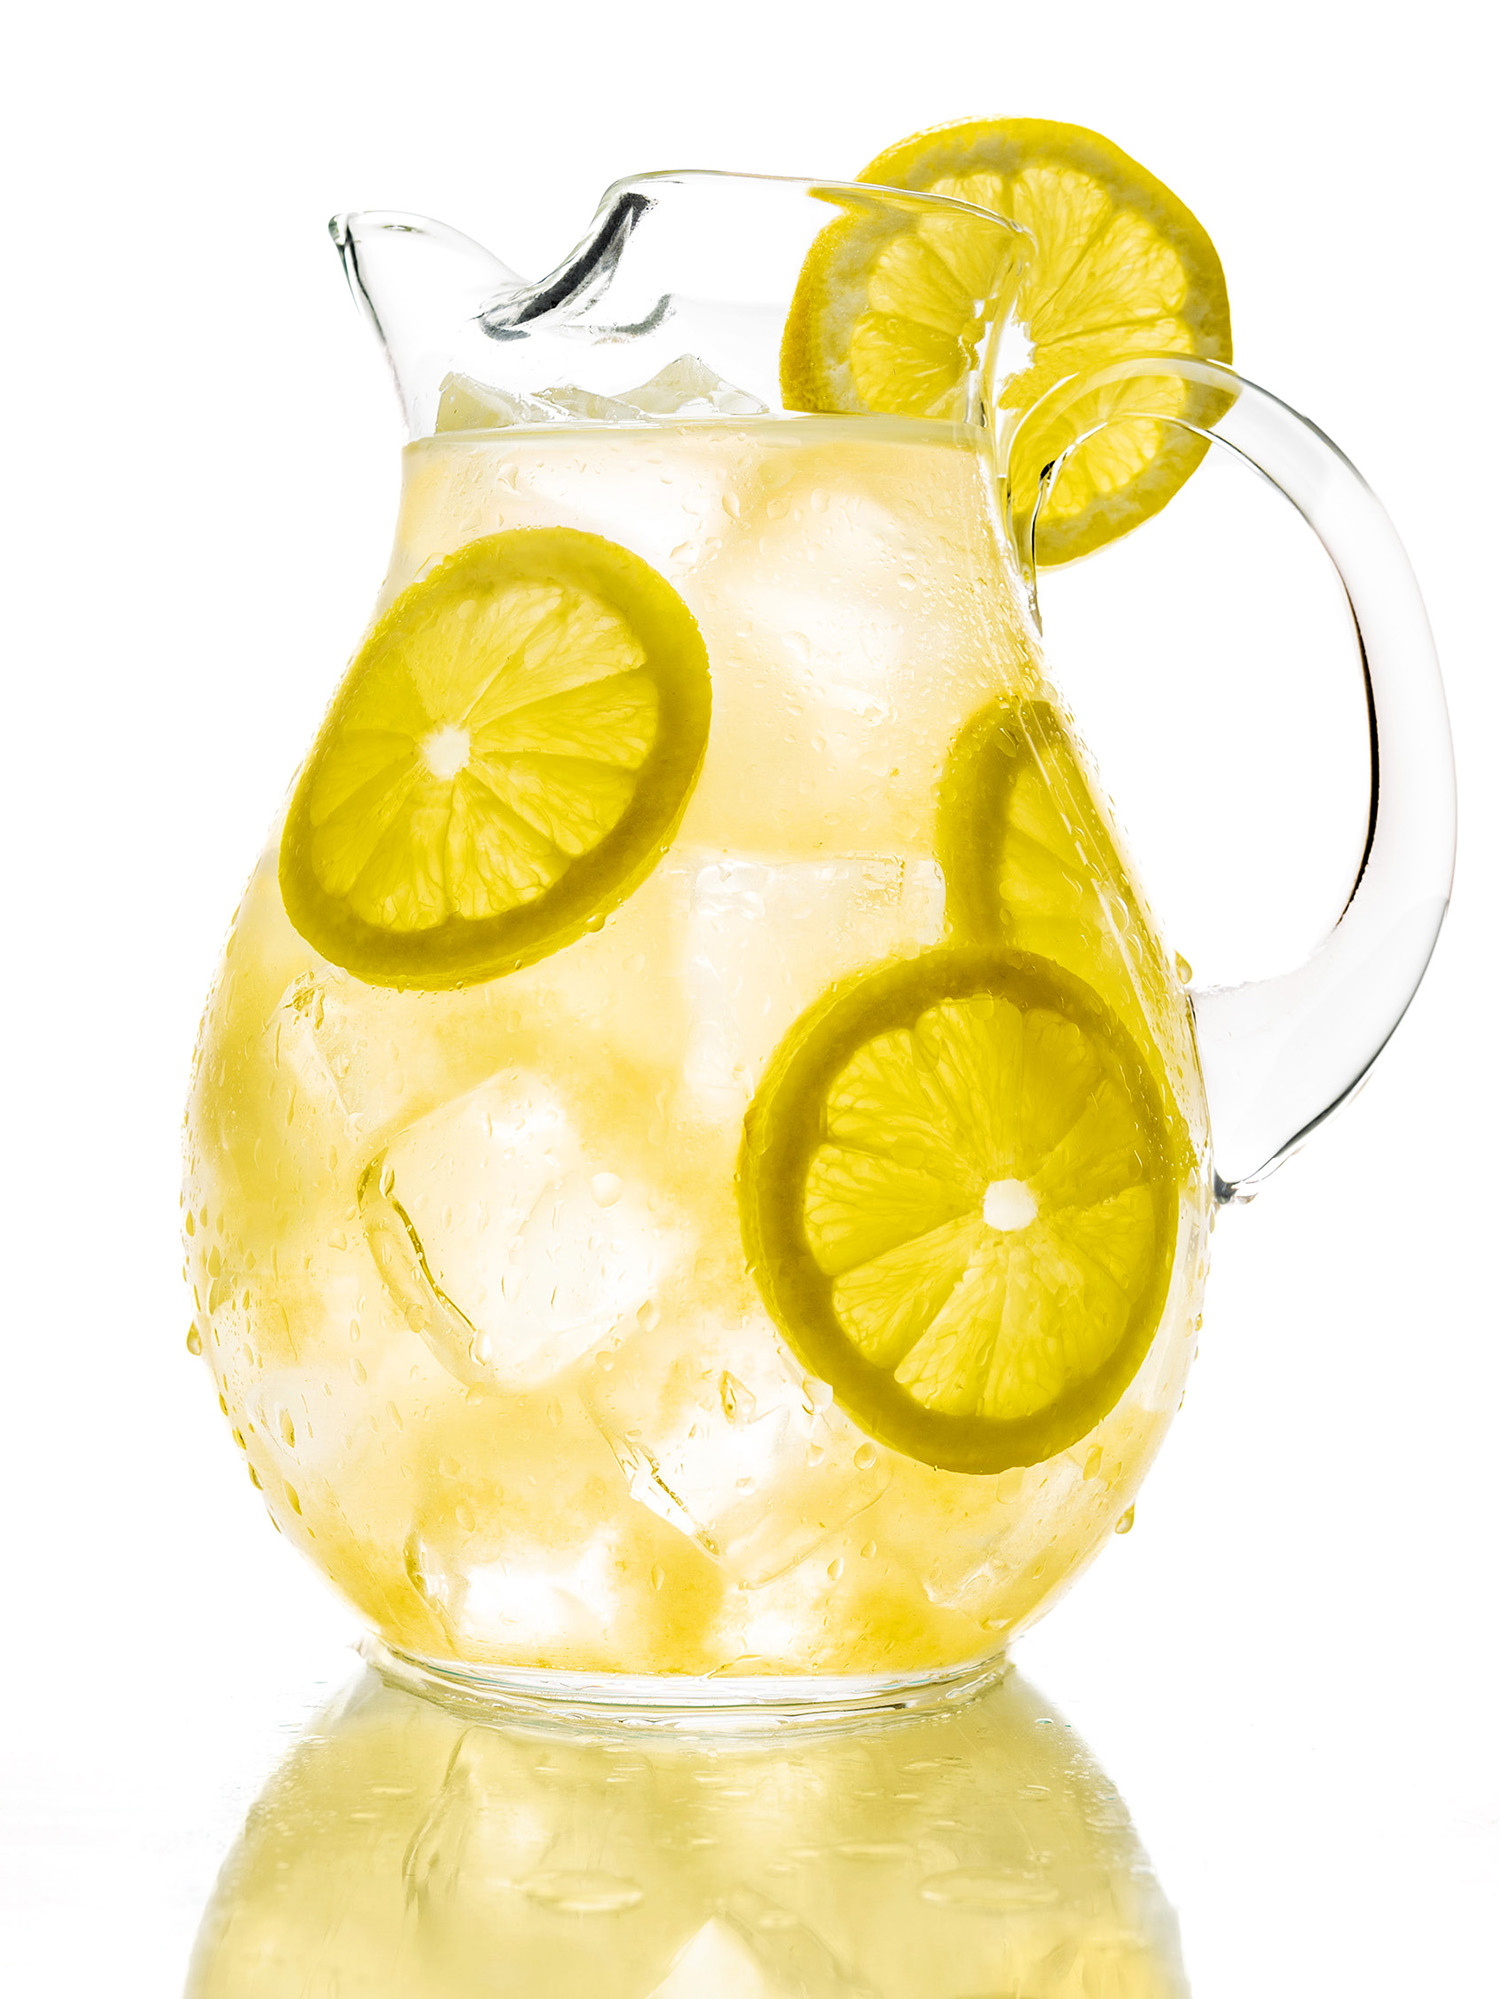 Lemonade_168.jpg